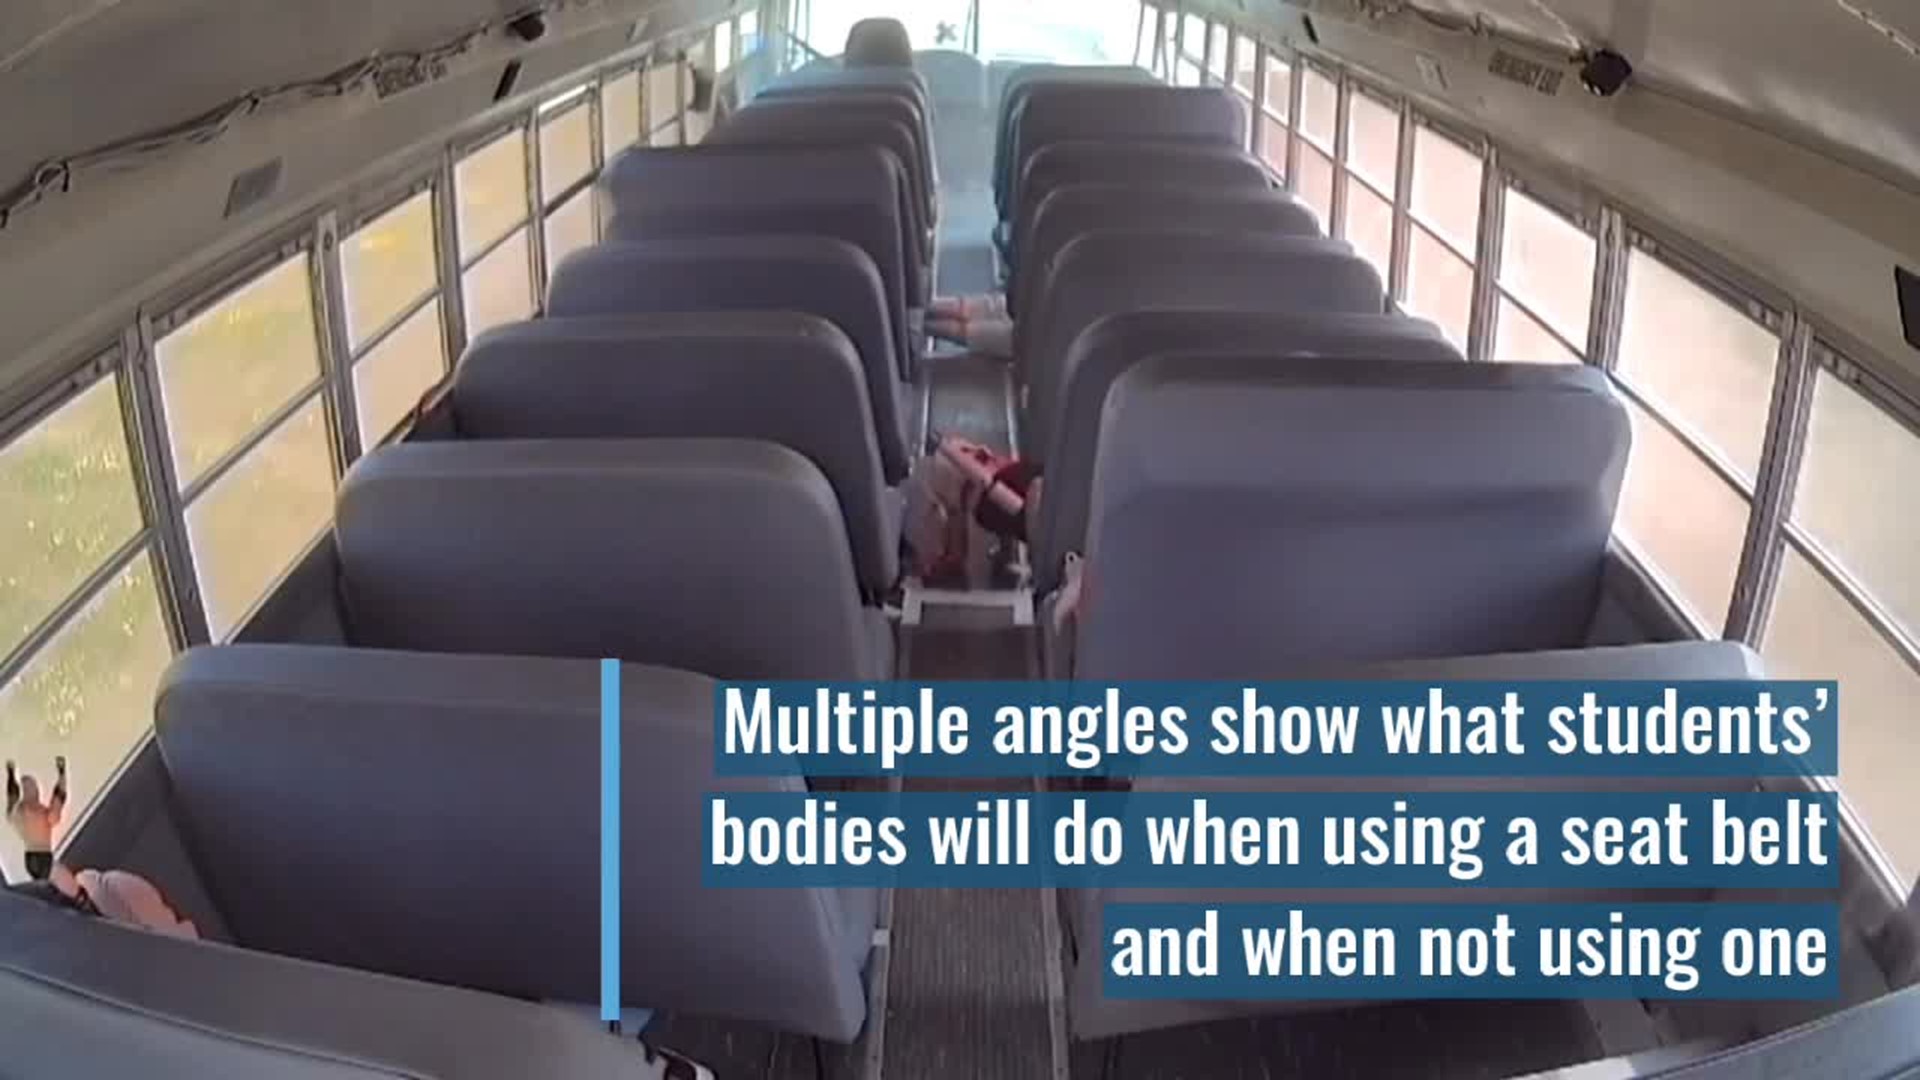 School bus crash simulation video shows importance of seat belts